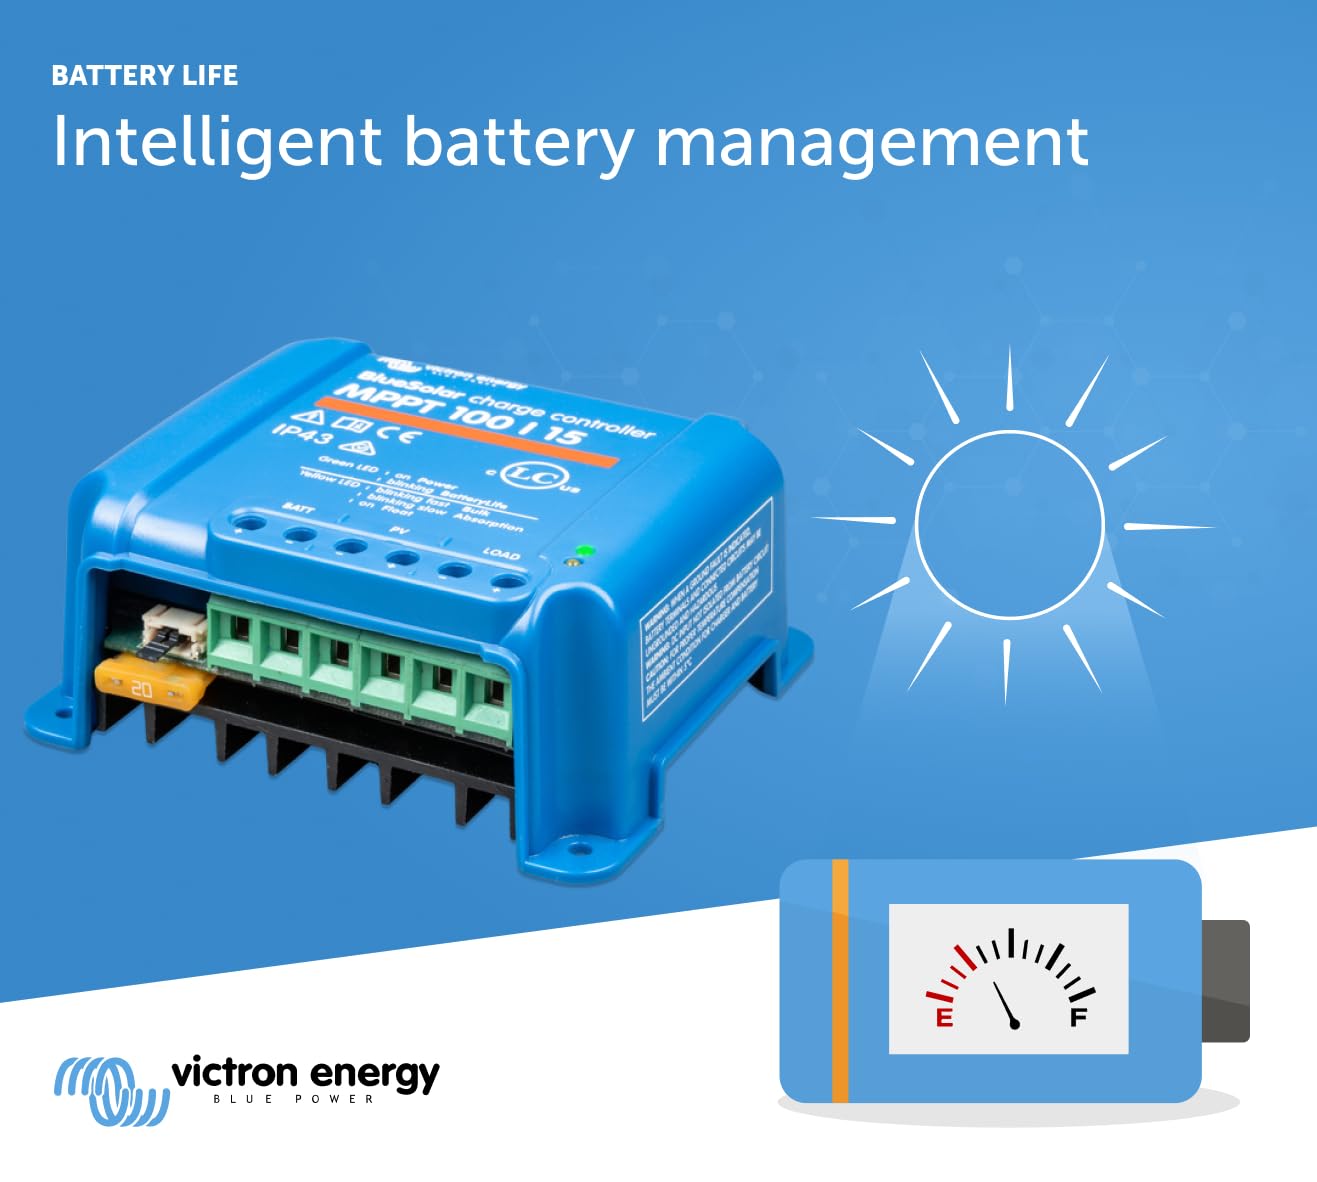 Victron Energy BlueSolar MPPT 100V 15 amp 12/24-Volt Solar Charge Controller